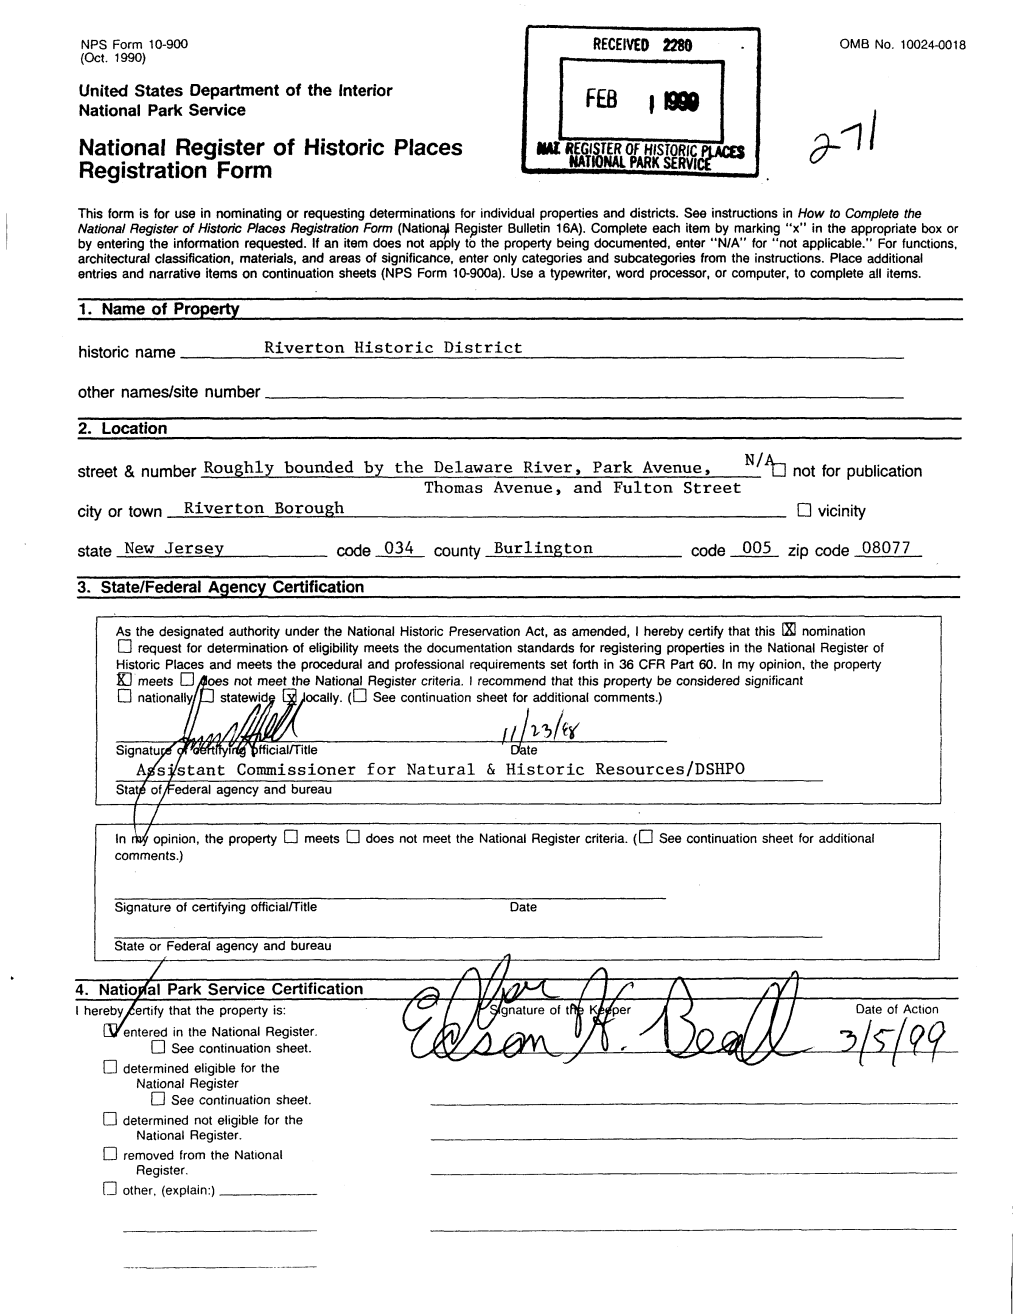 Riverton's 1999 National Register of Historic Places Registration Form